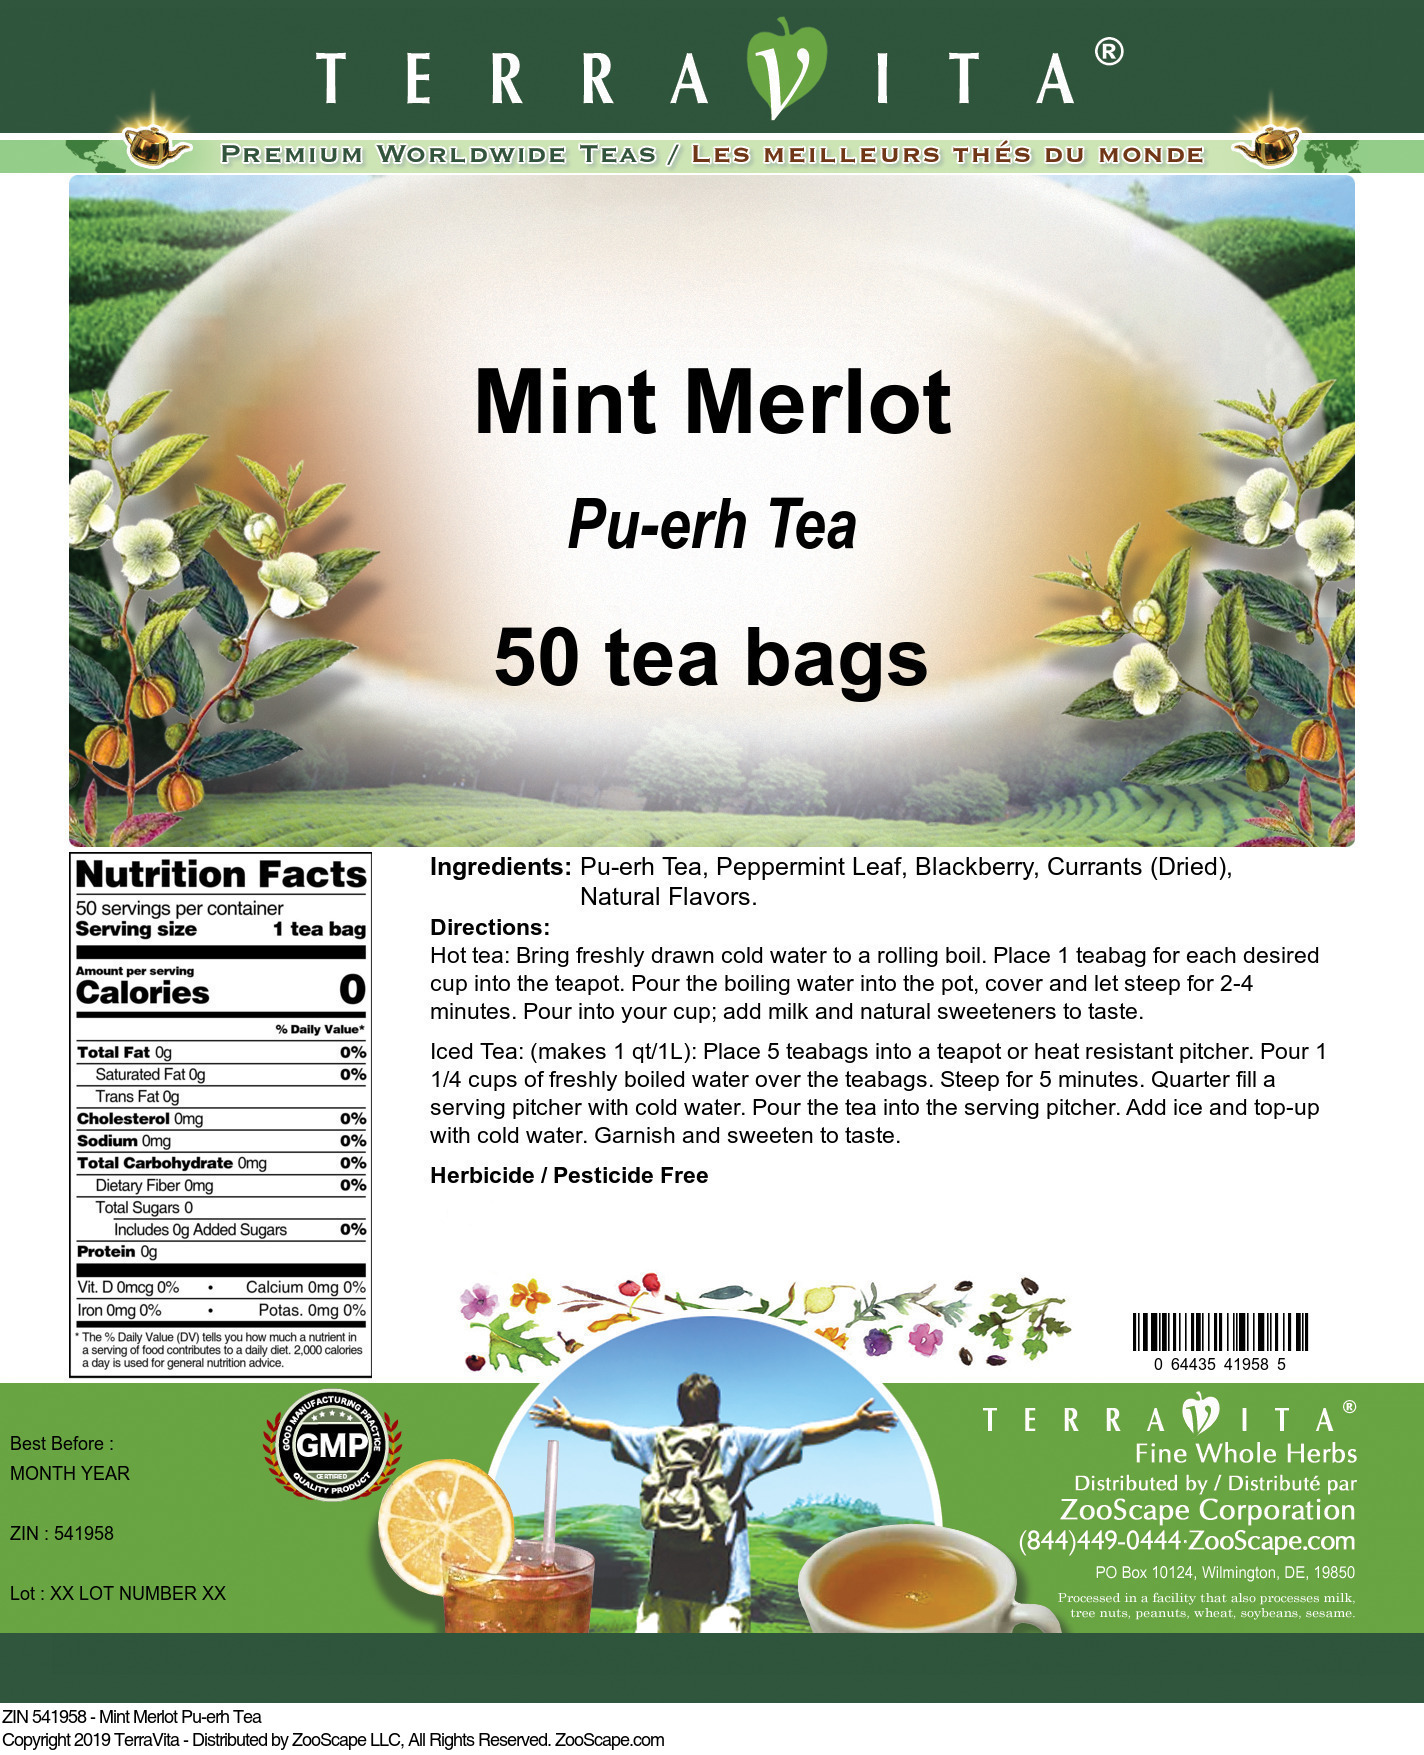 Mint Merlot Pu-erh Tea - Label